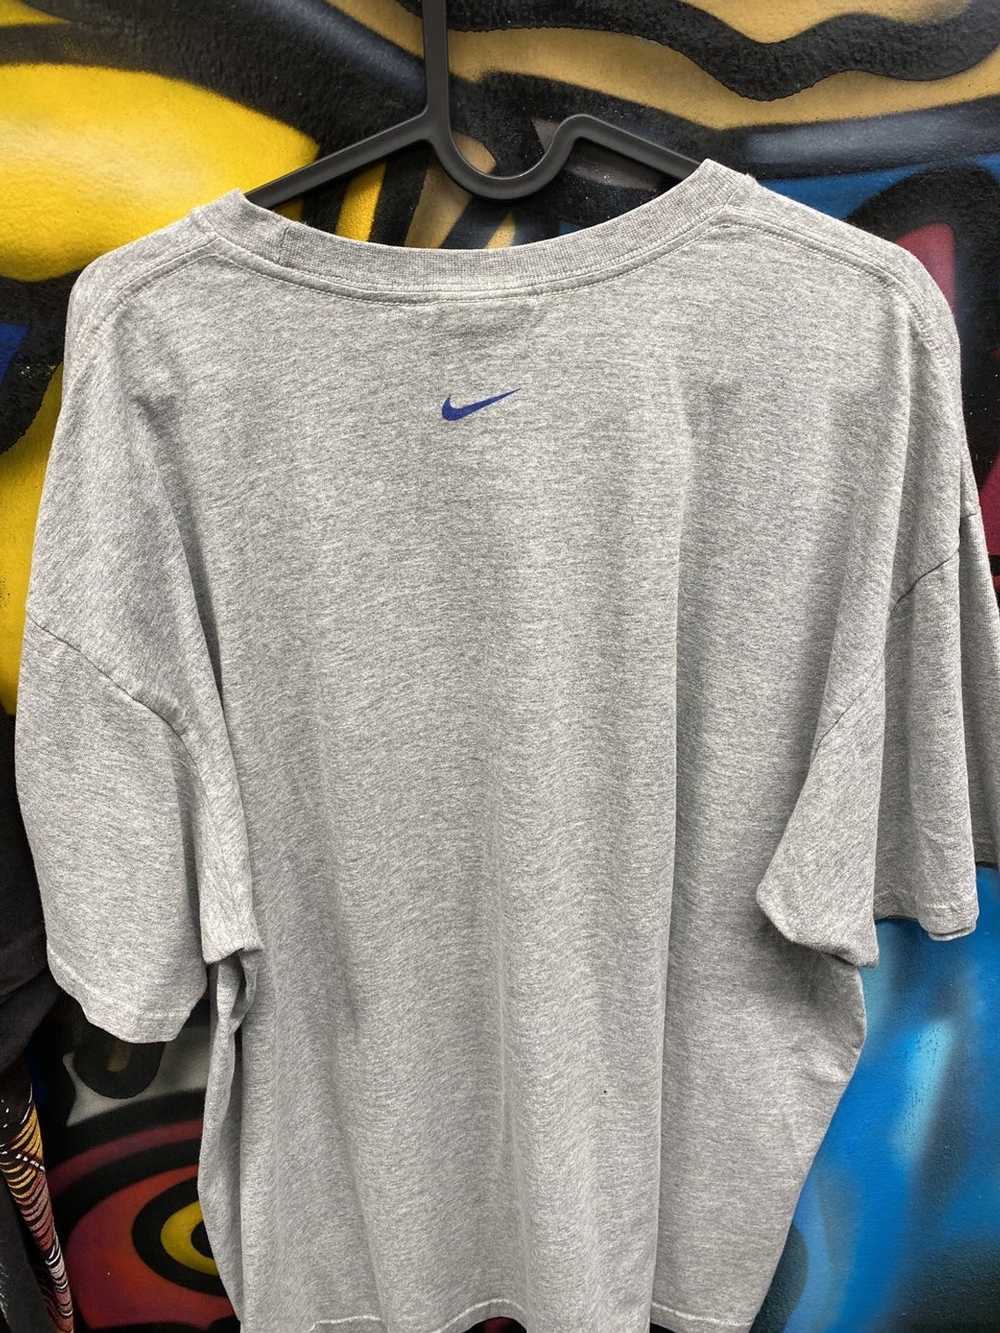 Vintage 2000s Nike shirt - image 3